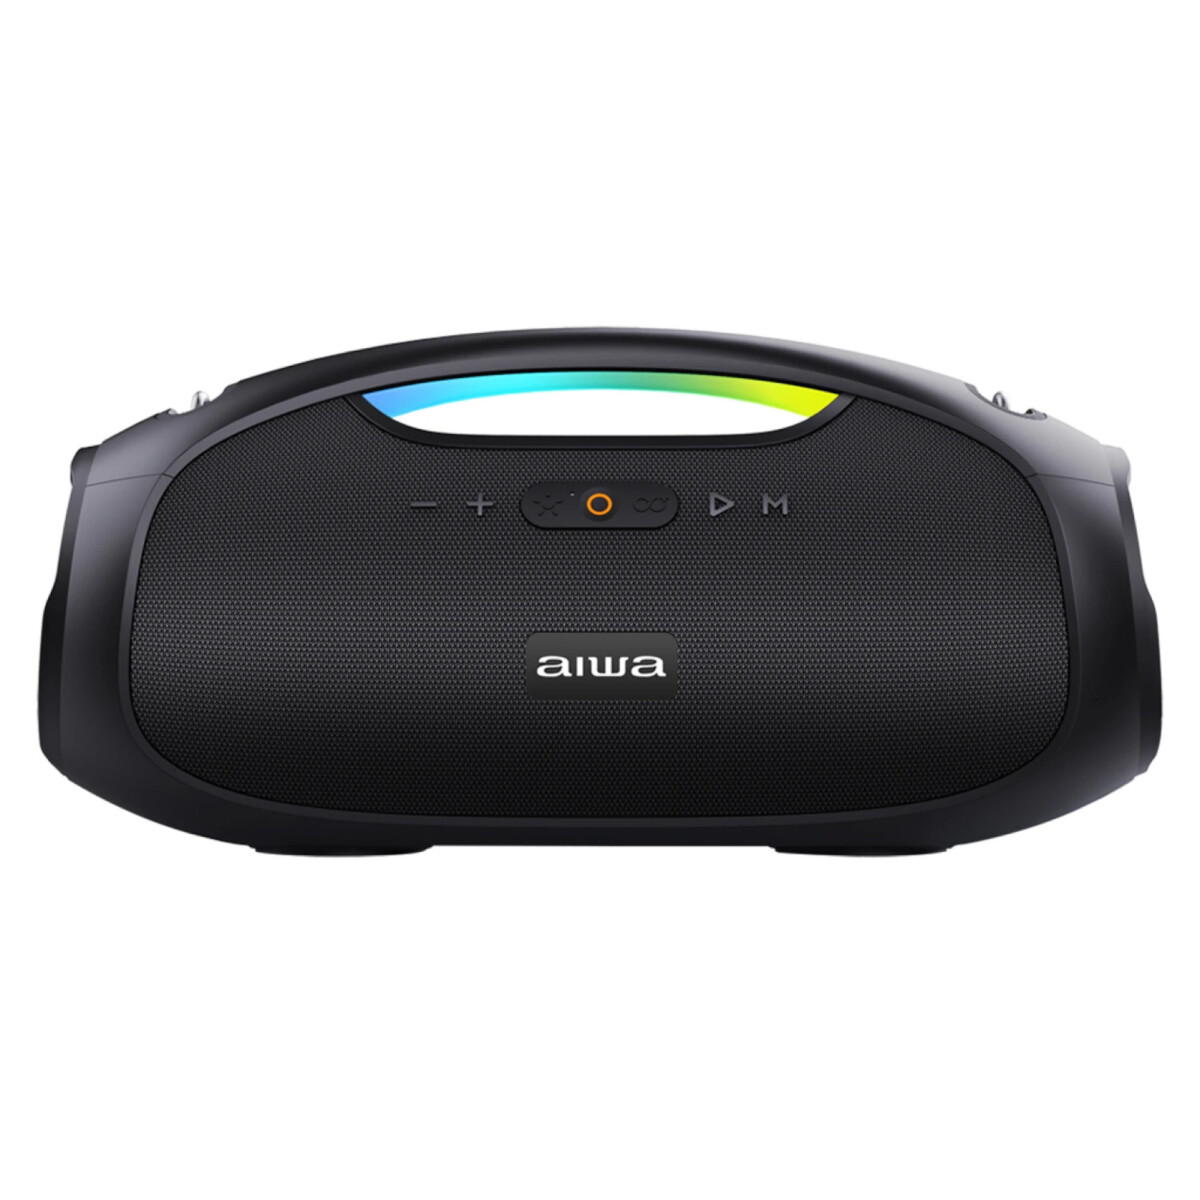 Aiwa - Parlante Inalámbrico Portátil AWS244BT - IPX6. Bluetooth. 60W. Color Negro. - 001 